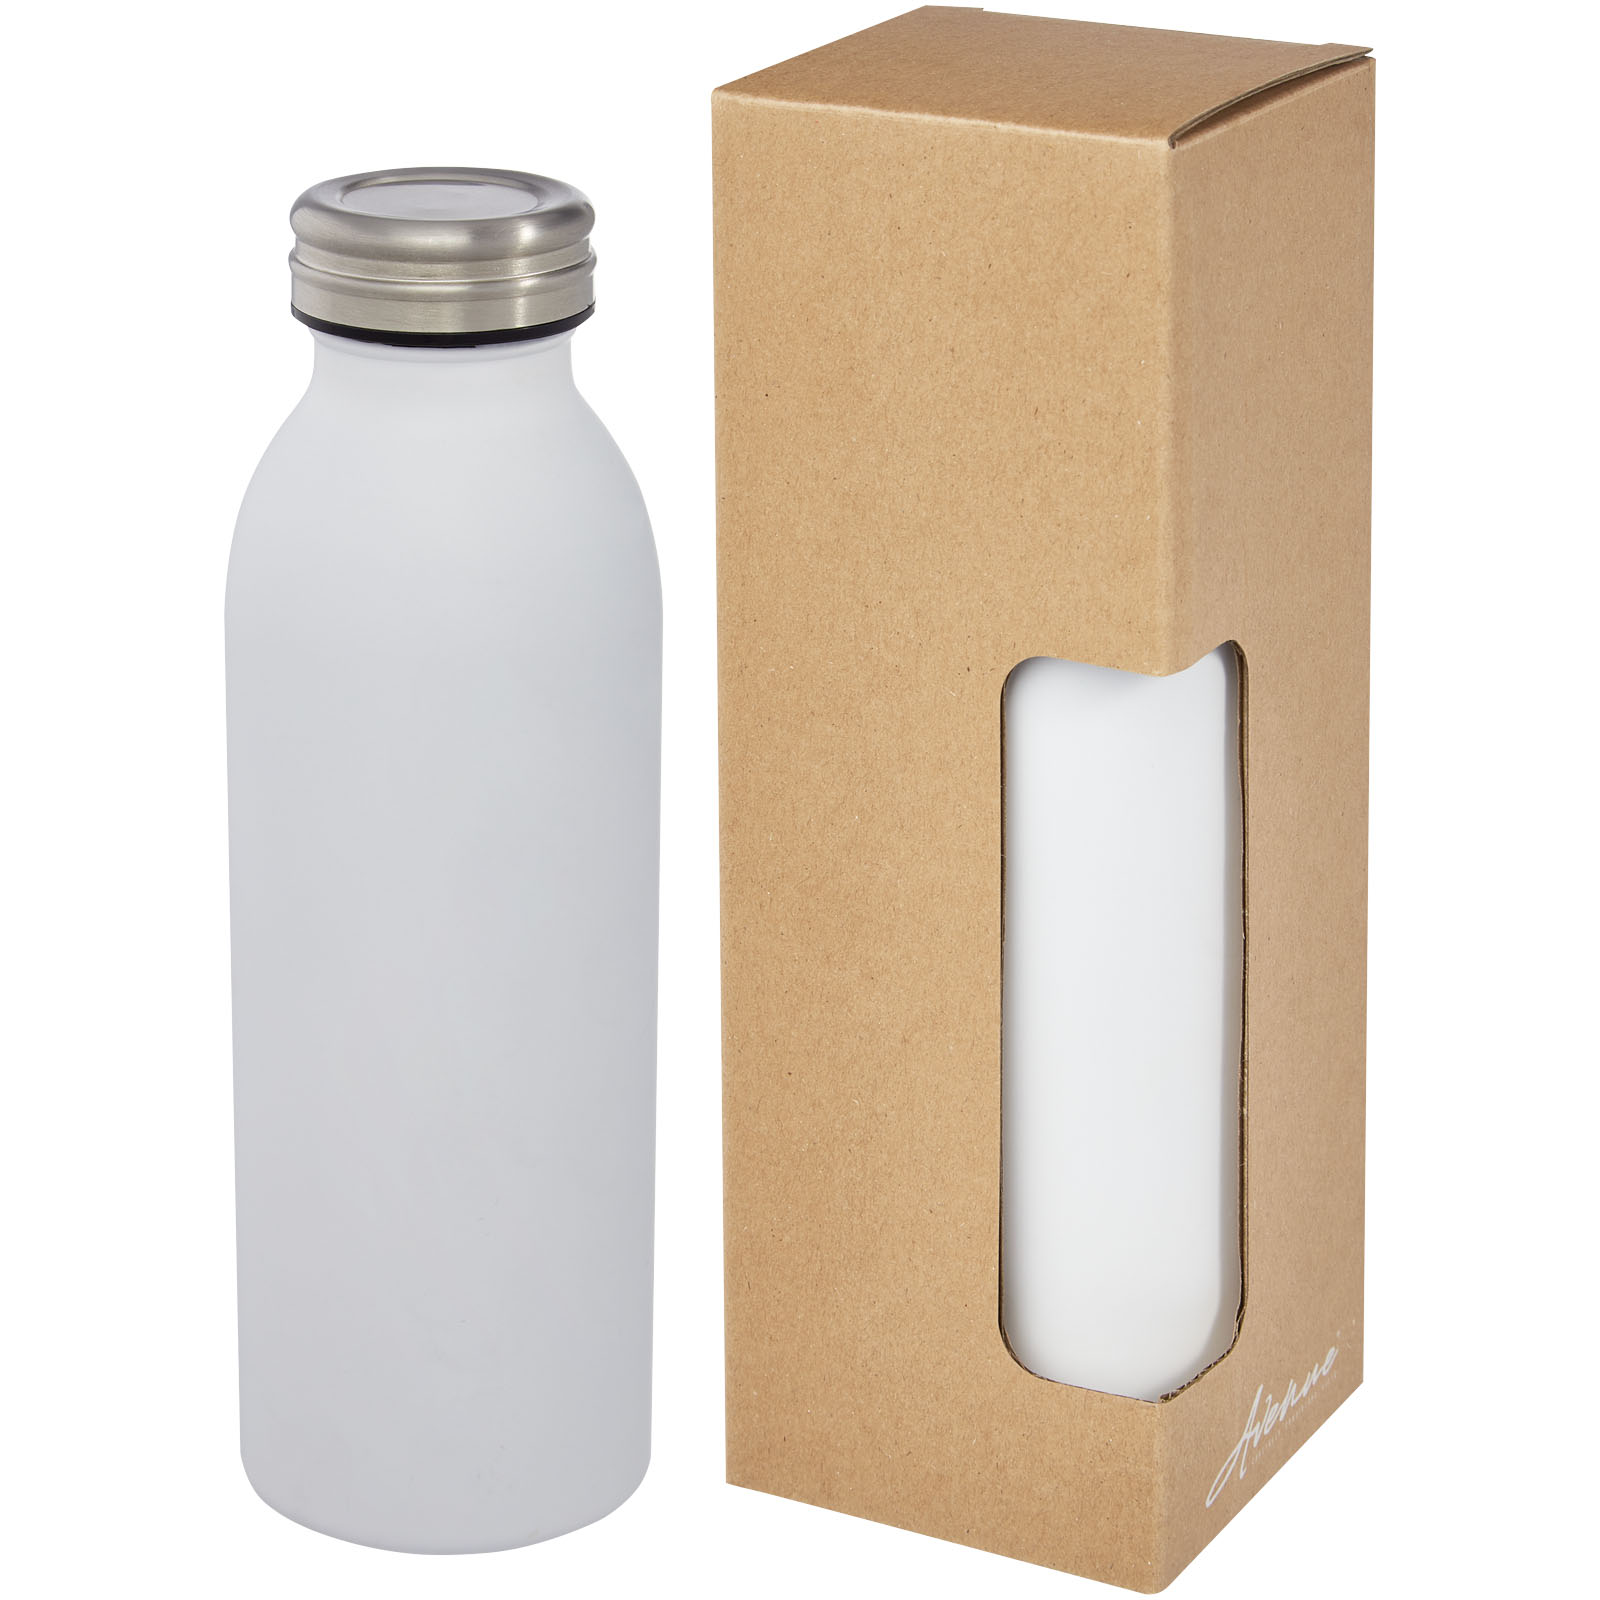 Insulated bottles - Riti 500 ml copper vacuum insulated bottle 